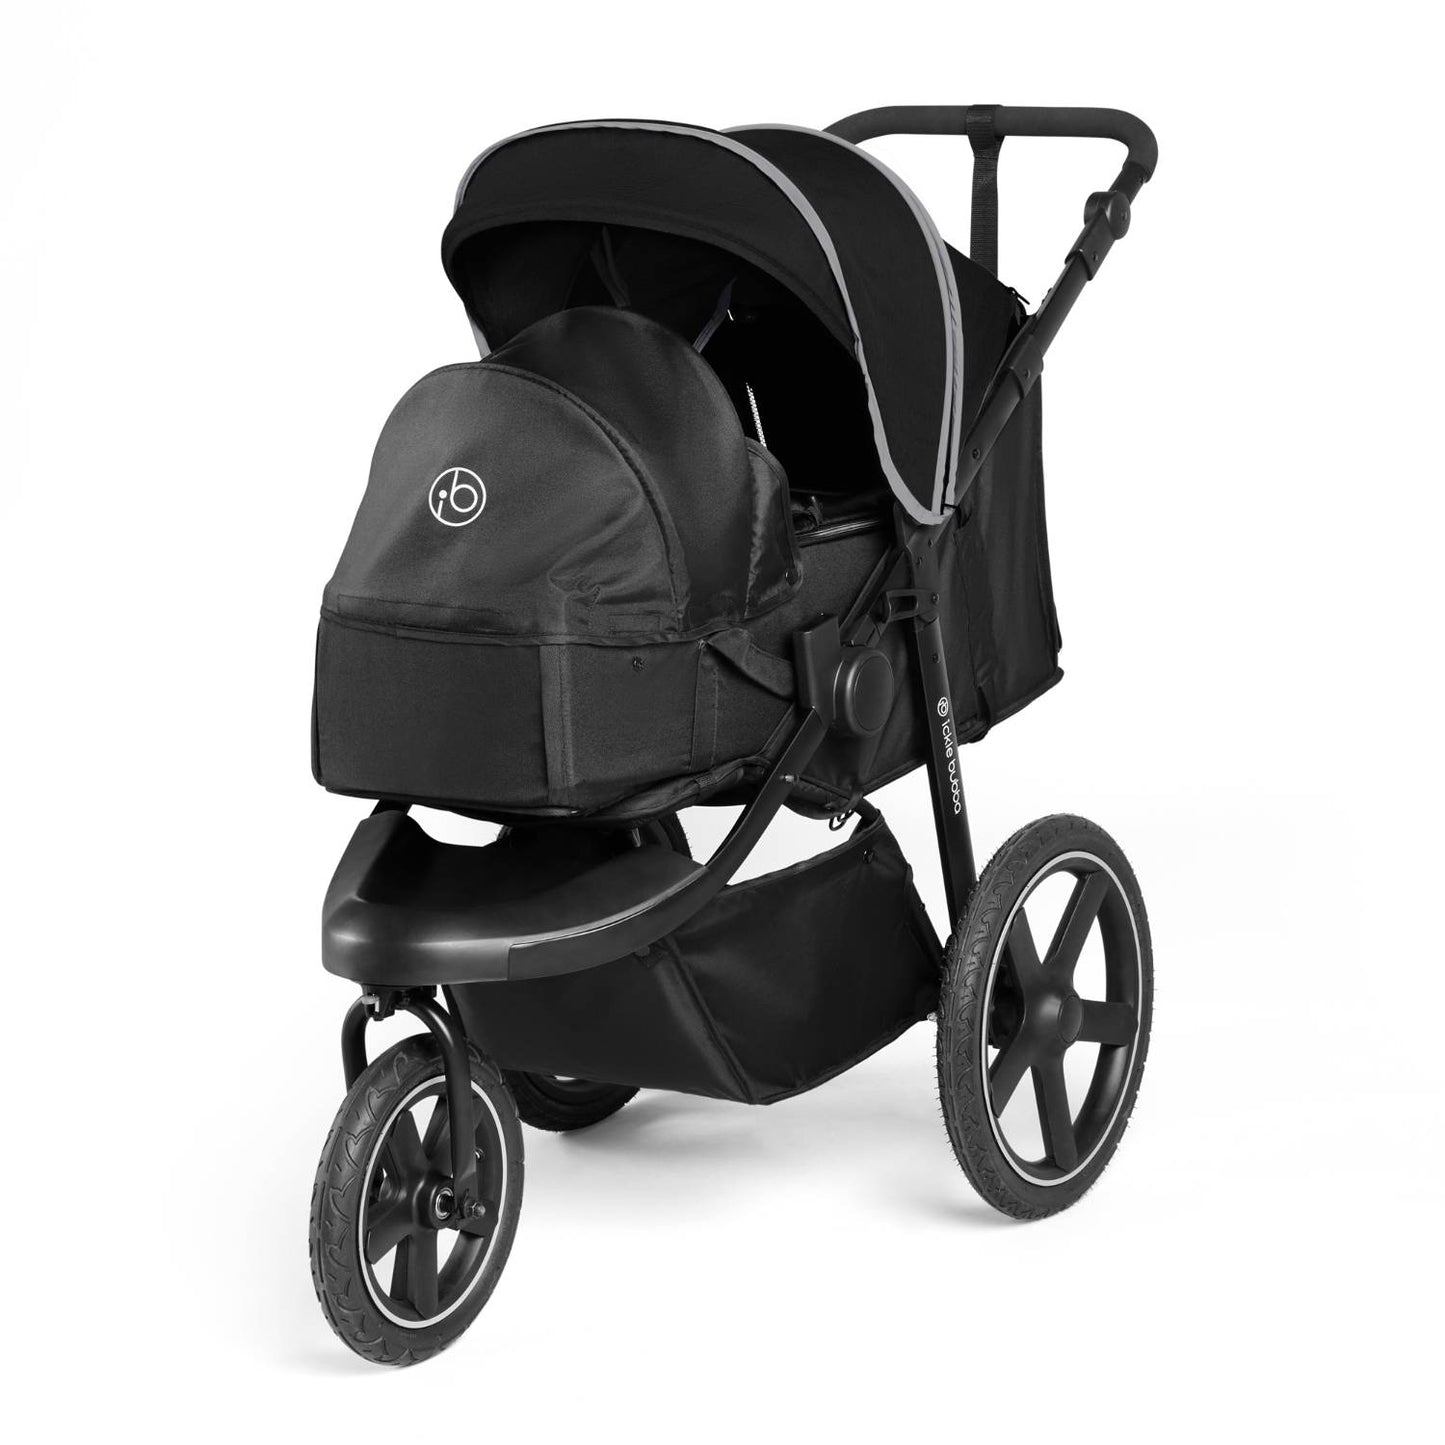 Ickle Bubba Venus Prime Jogger Stroller in Black colour with newborn cocoon